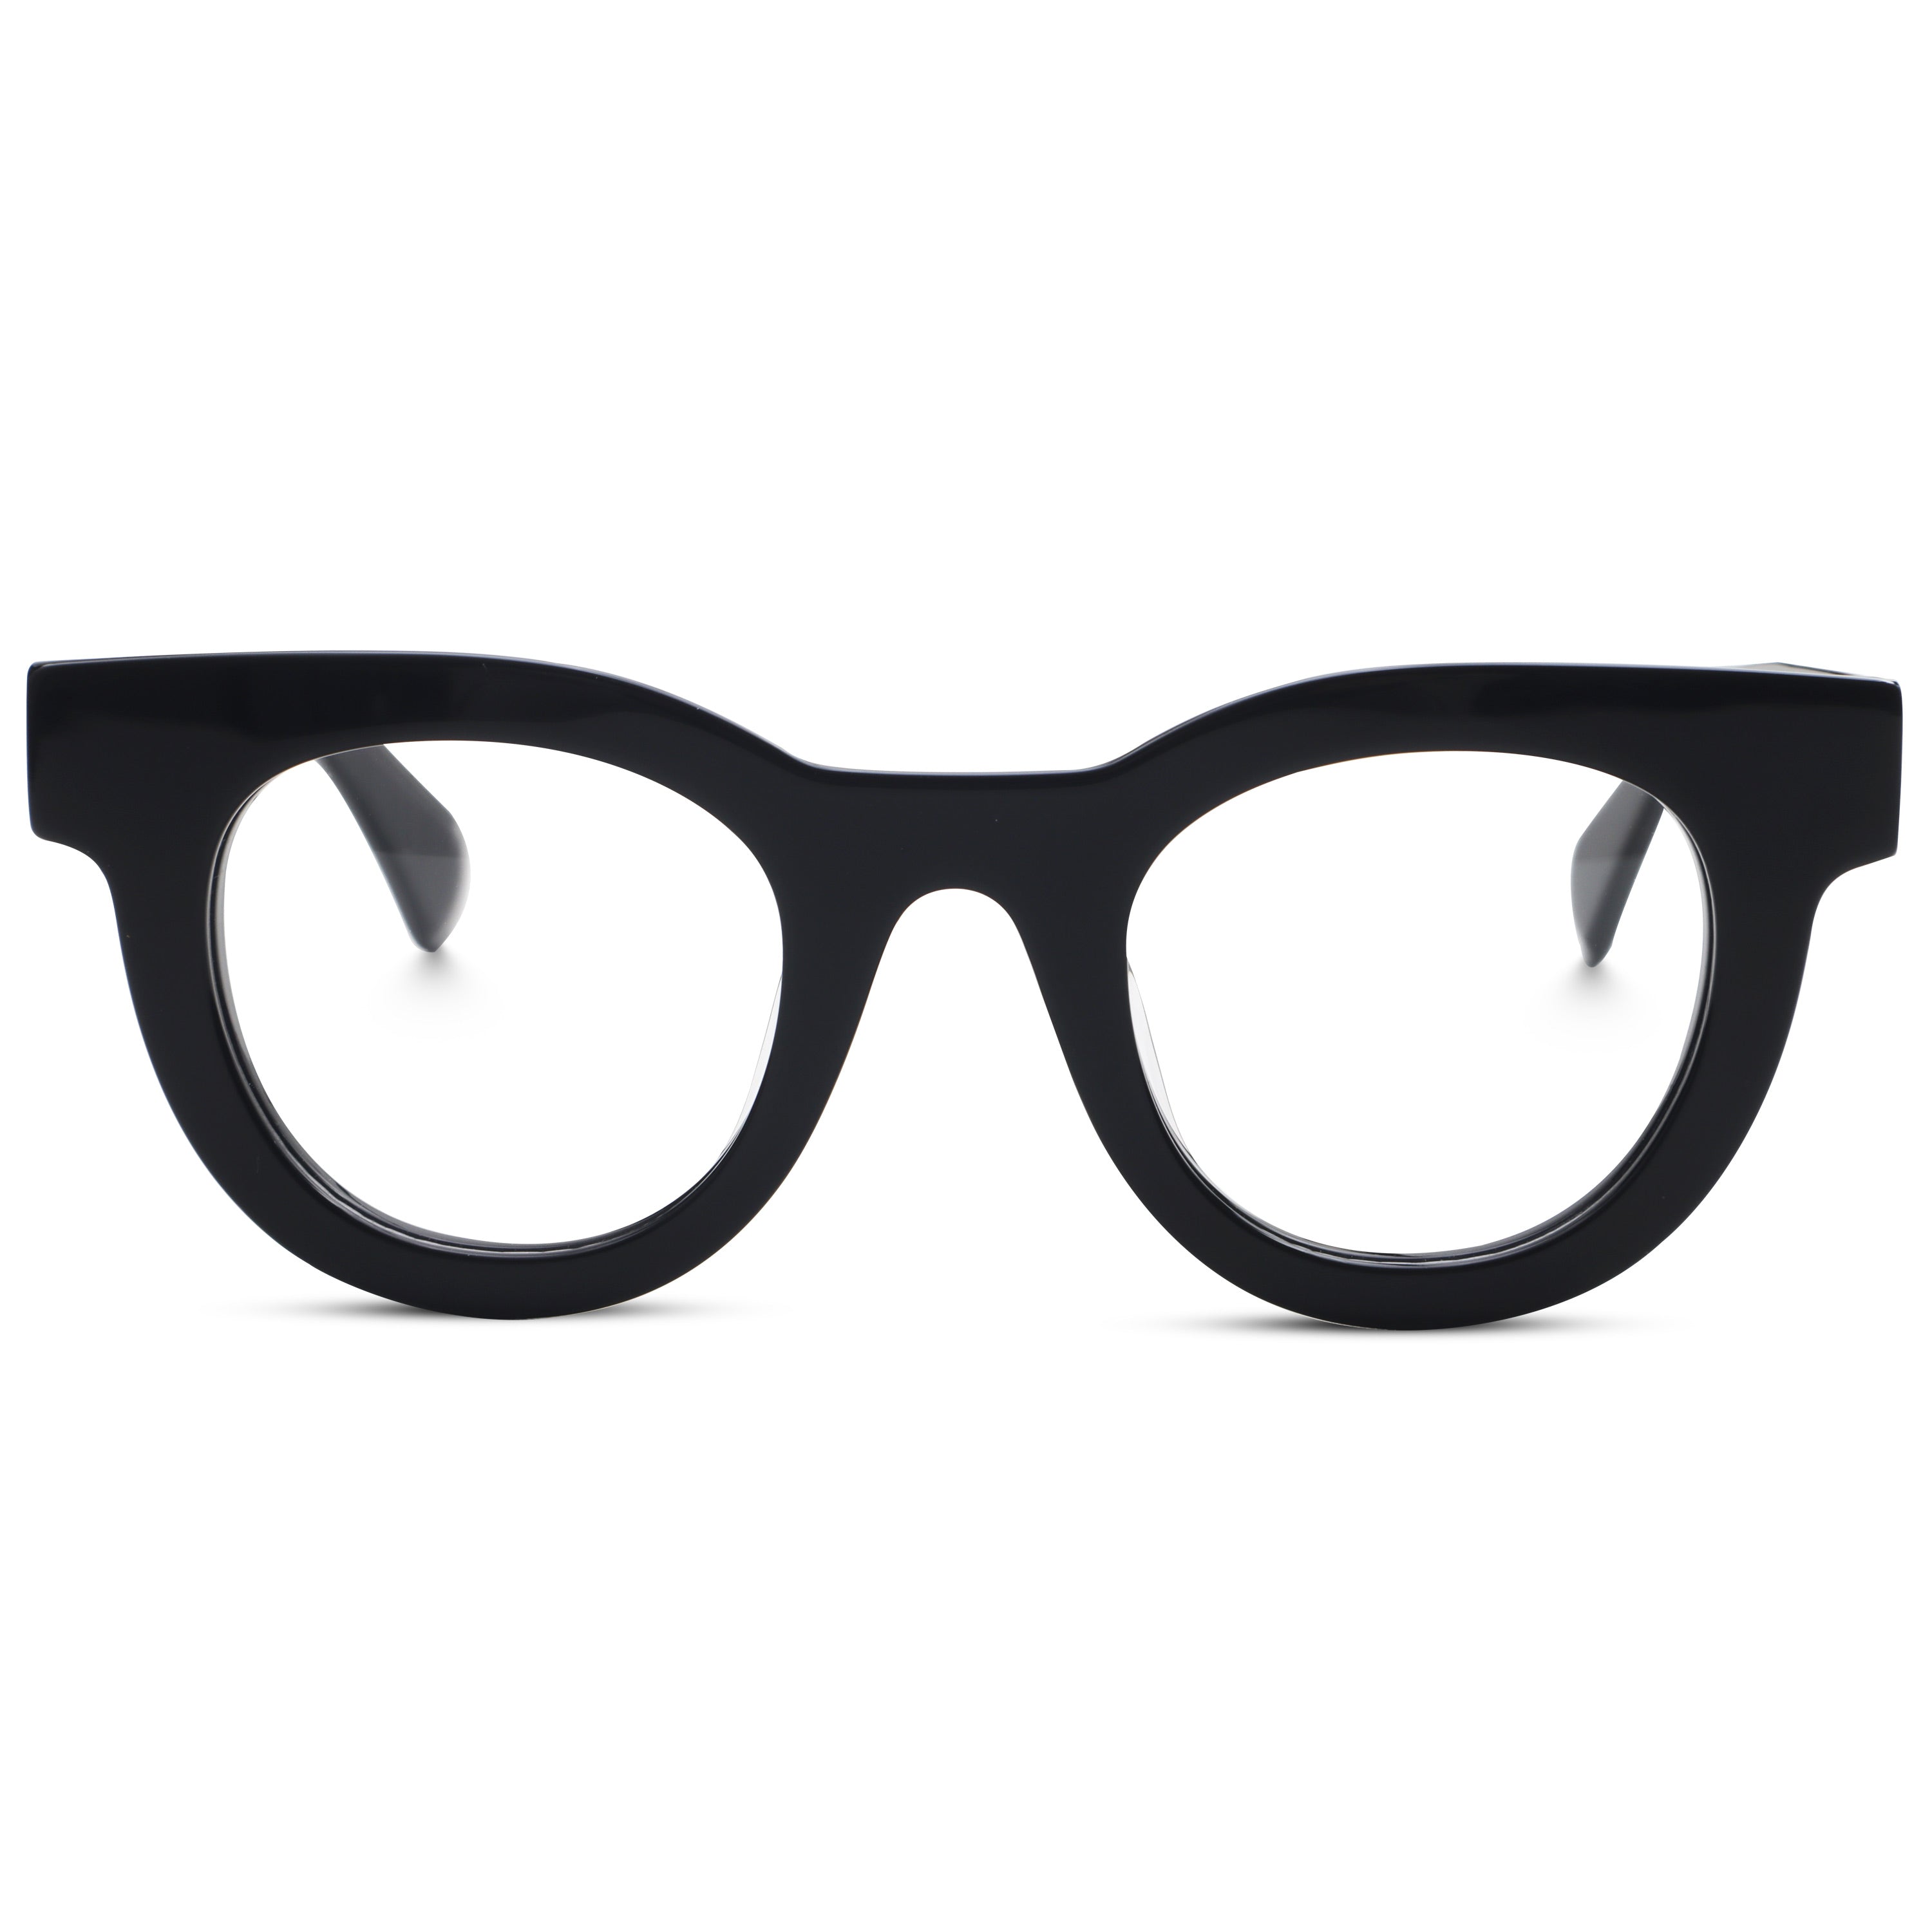 how to identify vintage eyeglasses